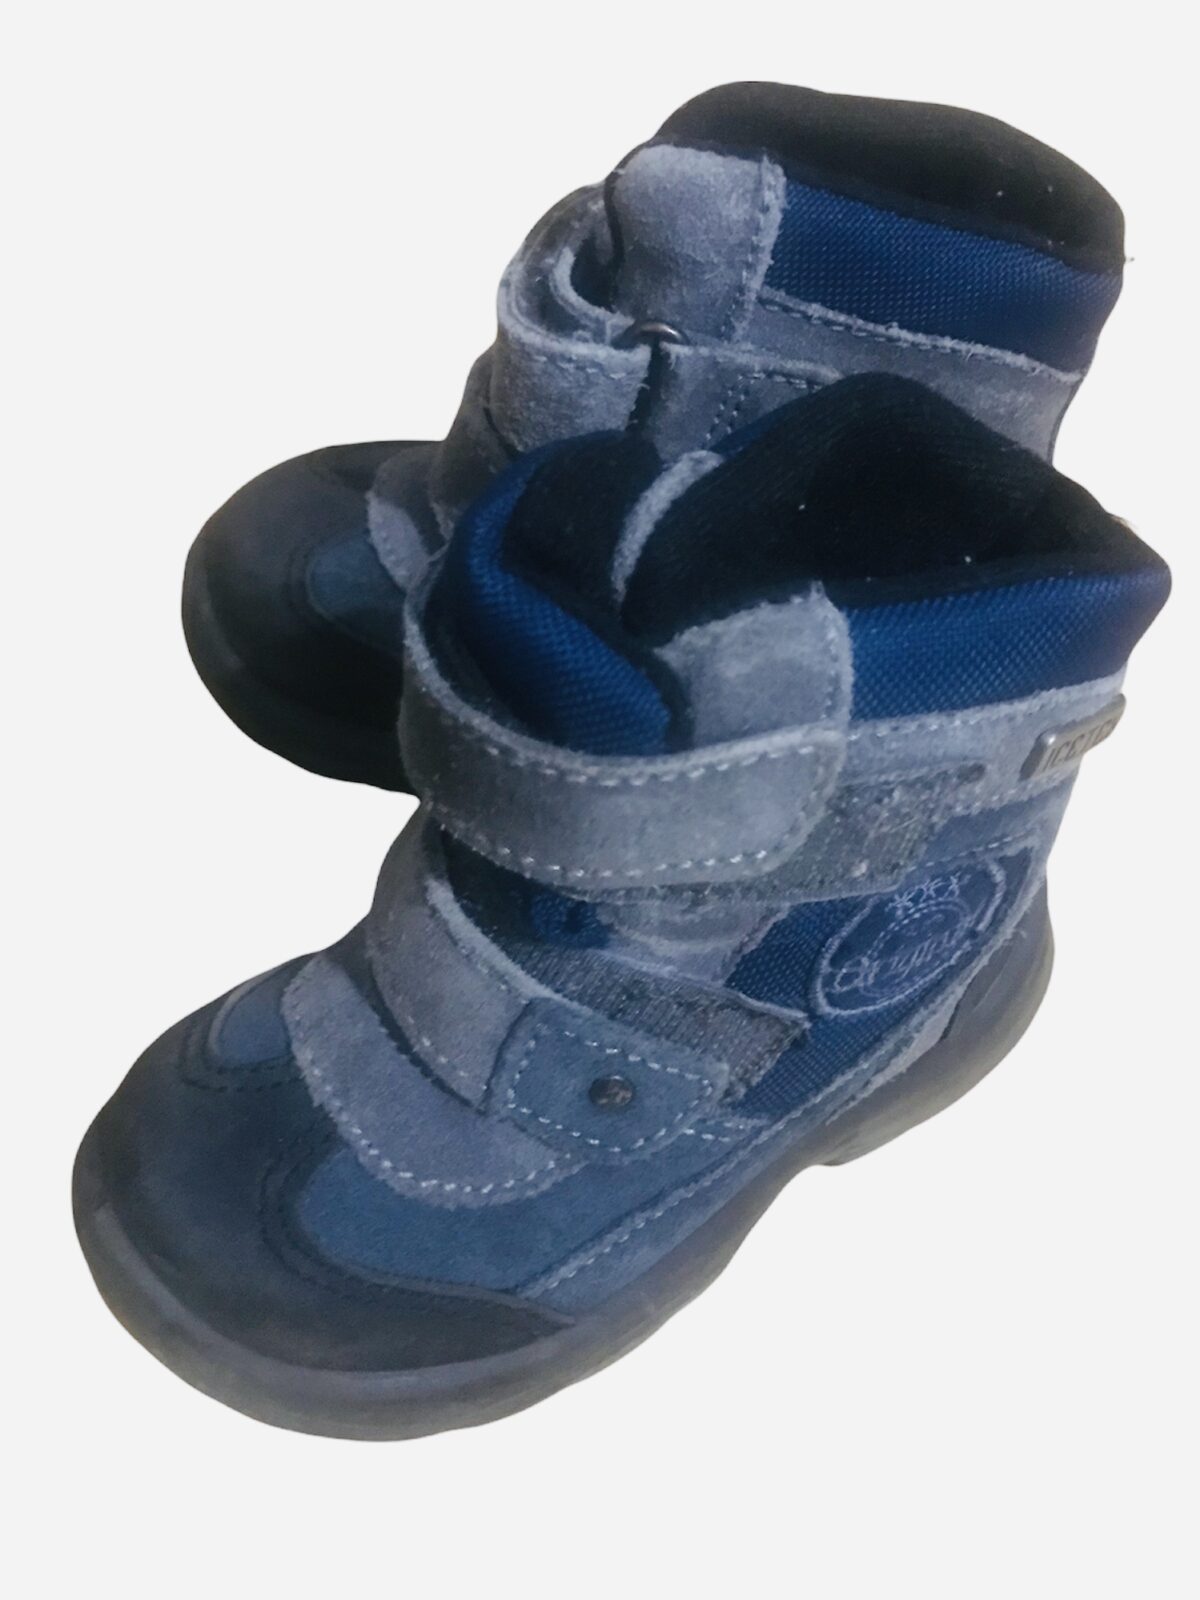 Modro šedé chlapecké boty s membránou - vel. 21